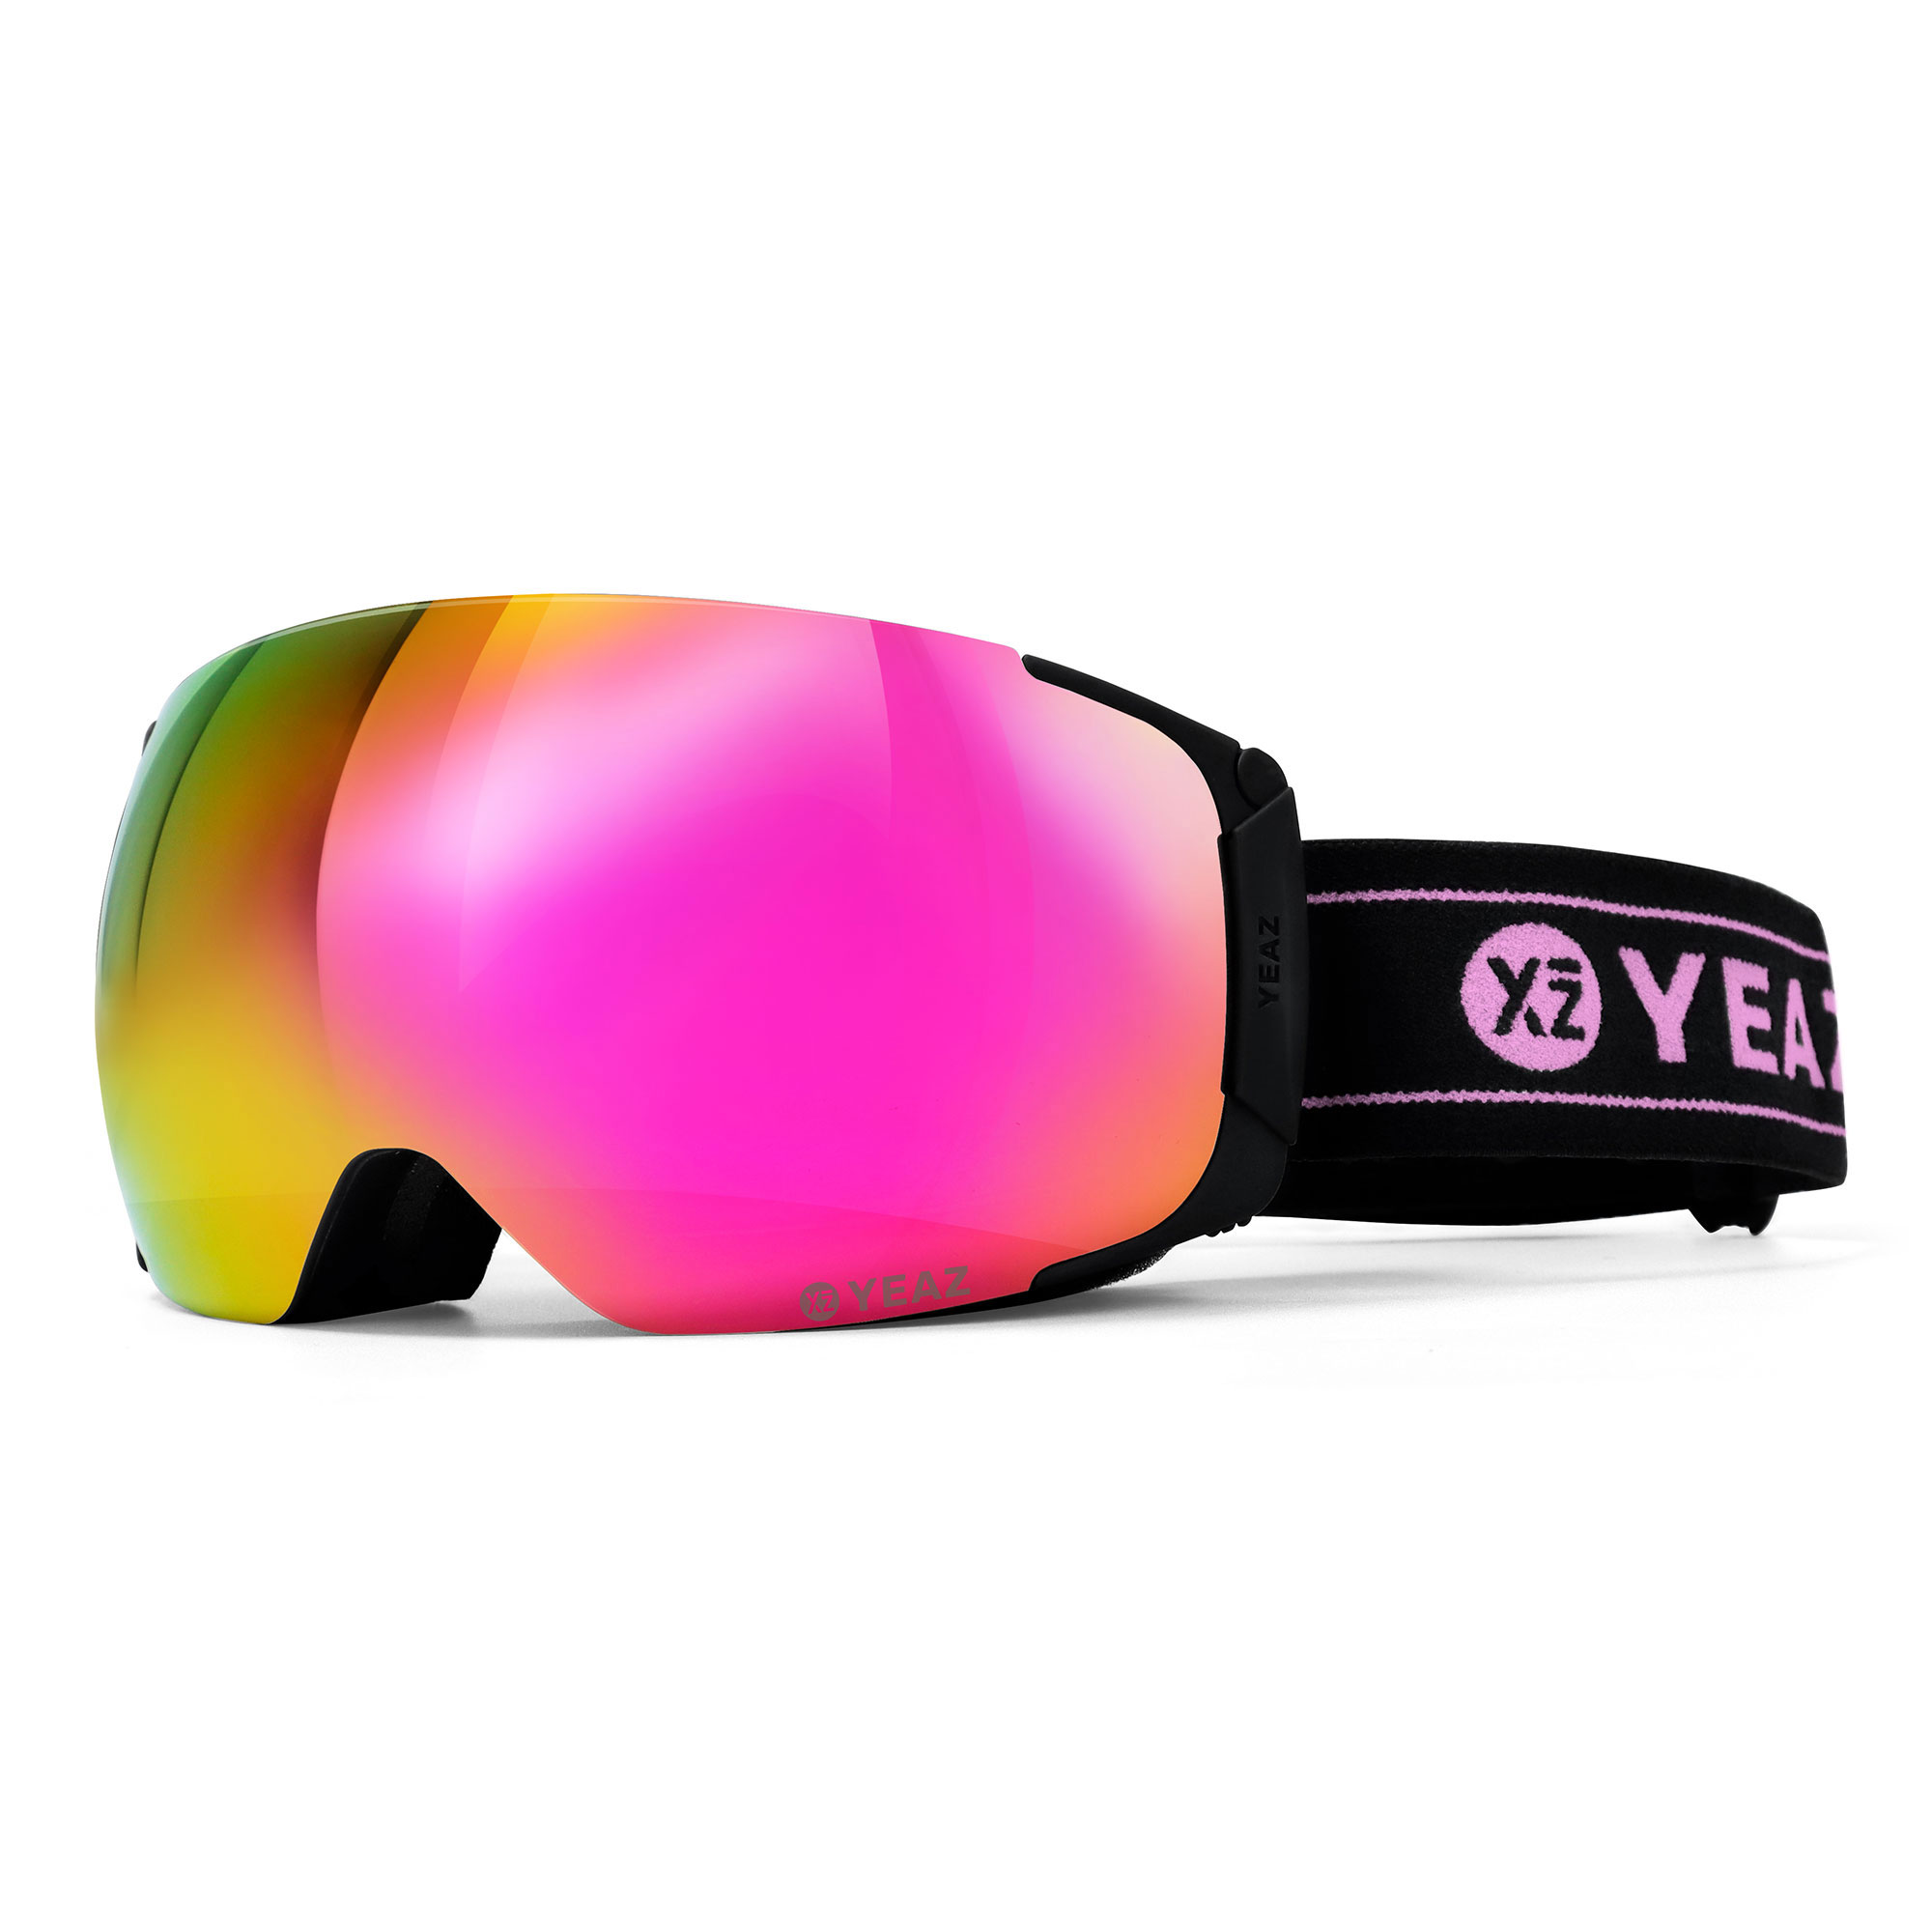 STEEZE Masque de ski/snowboard violet/blanc